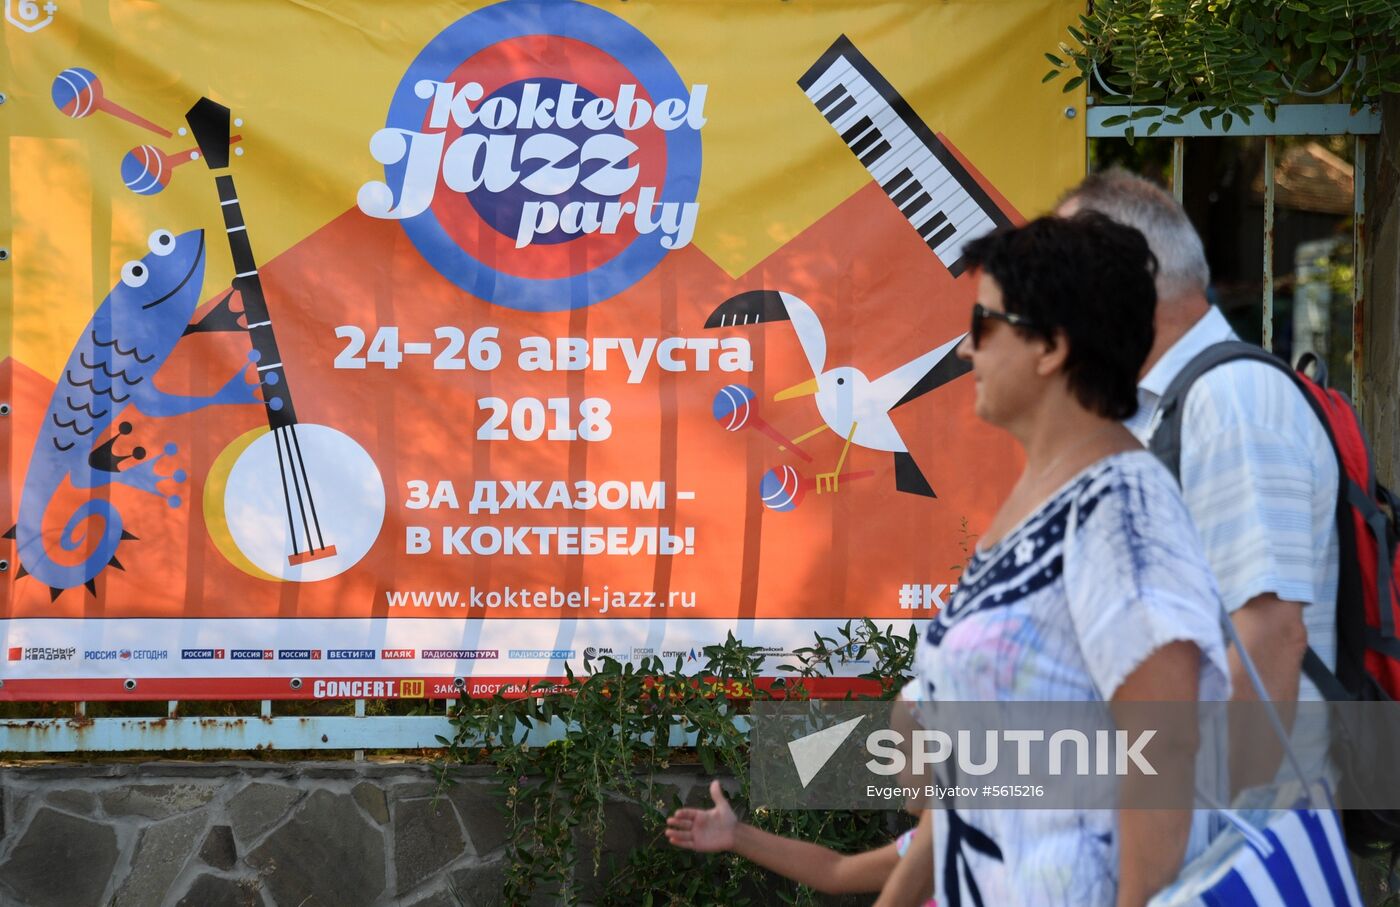 Preparations for Koktebel Jazz Party festival